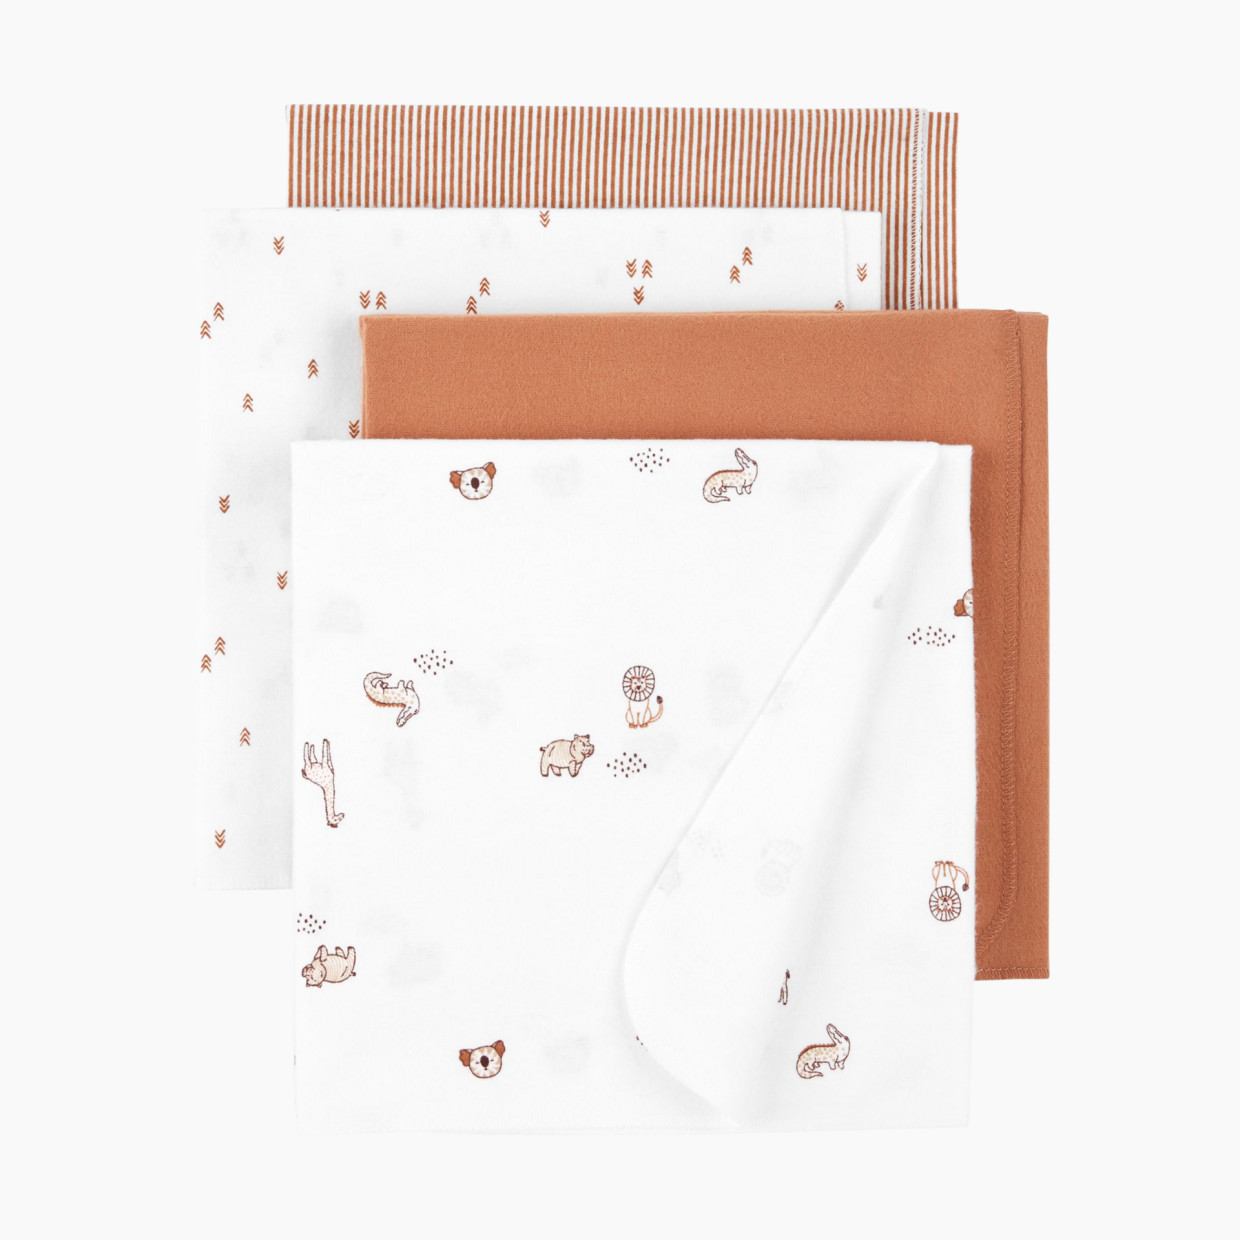 Carter's Receiving Blankets (4 Pack) - Animals/Stripes/Brown, Osz.